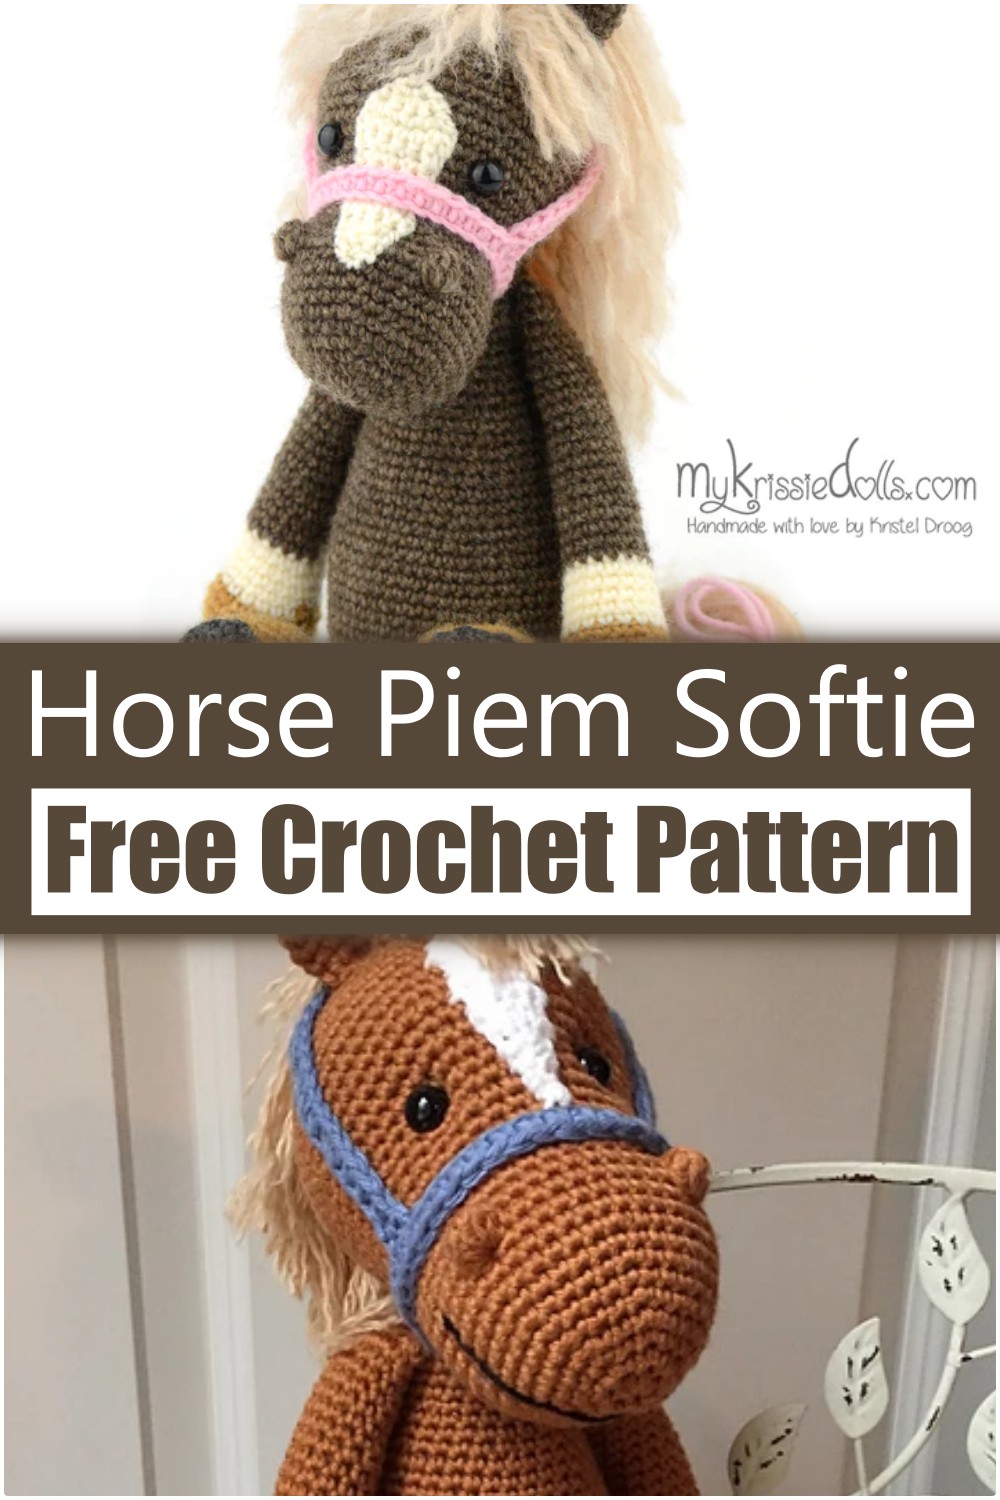 Horse Piem Softie Crochet Pattern